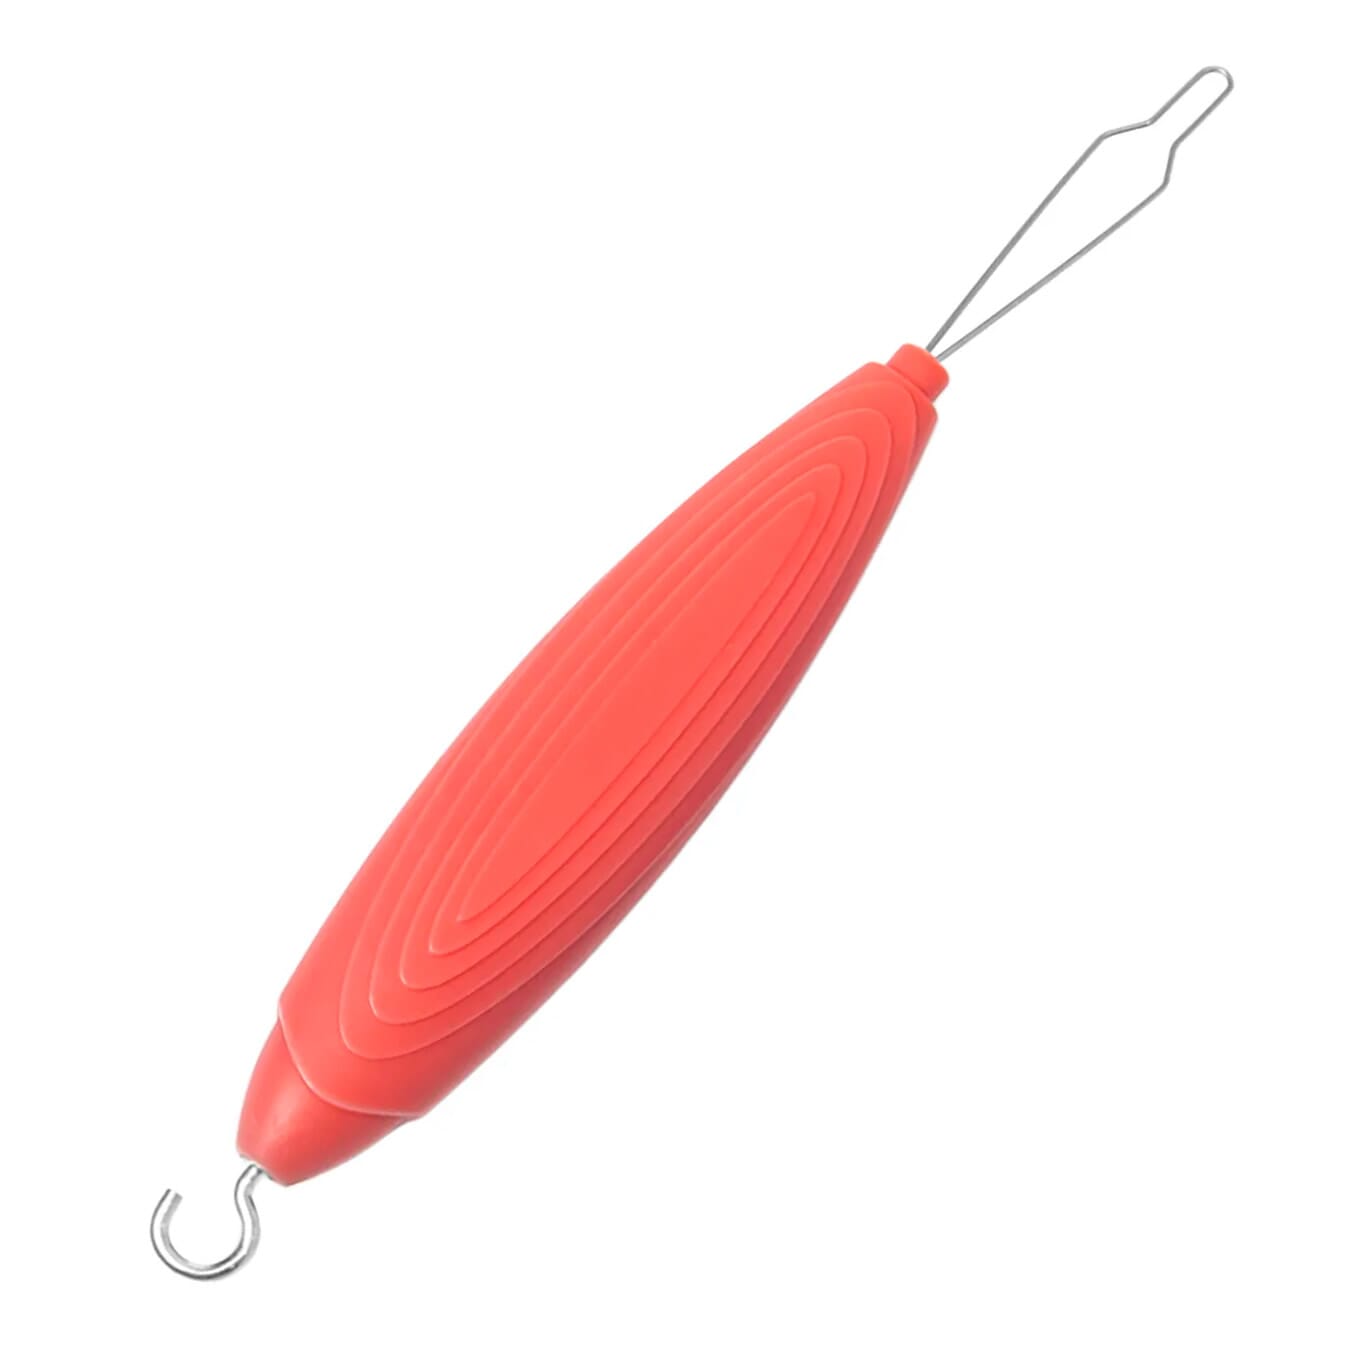 Red Pocket Dresser Button Hook Zipper Pull : heavy duty dressing tools